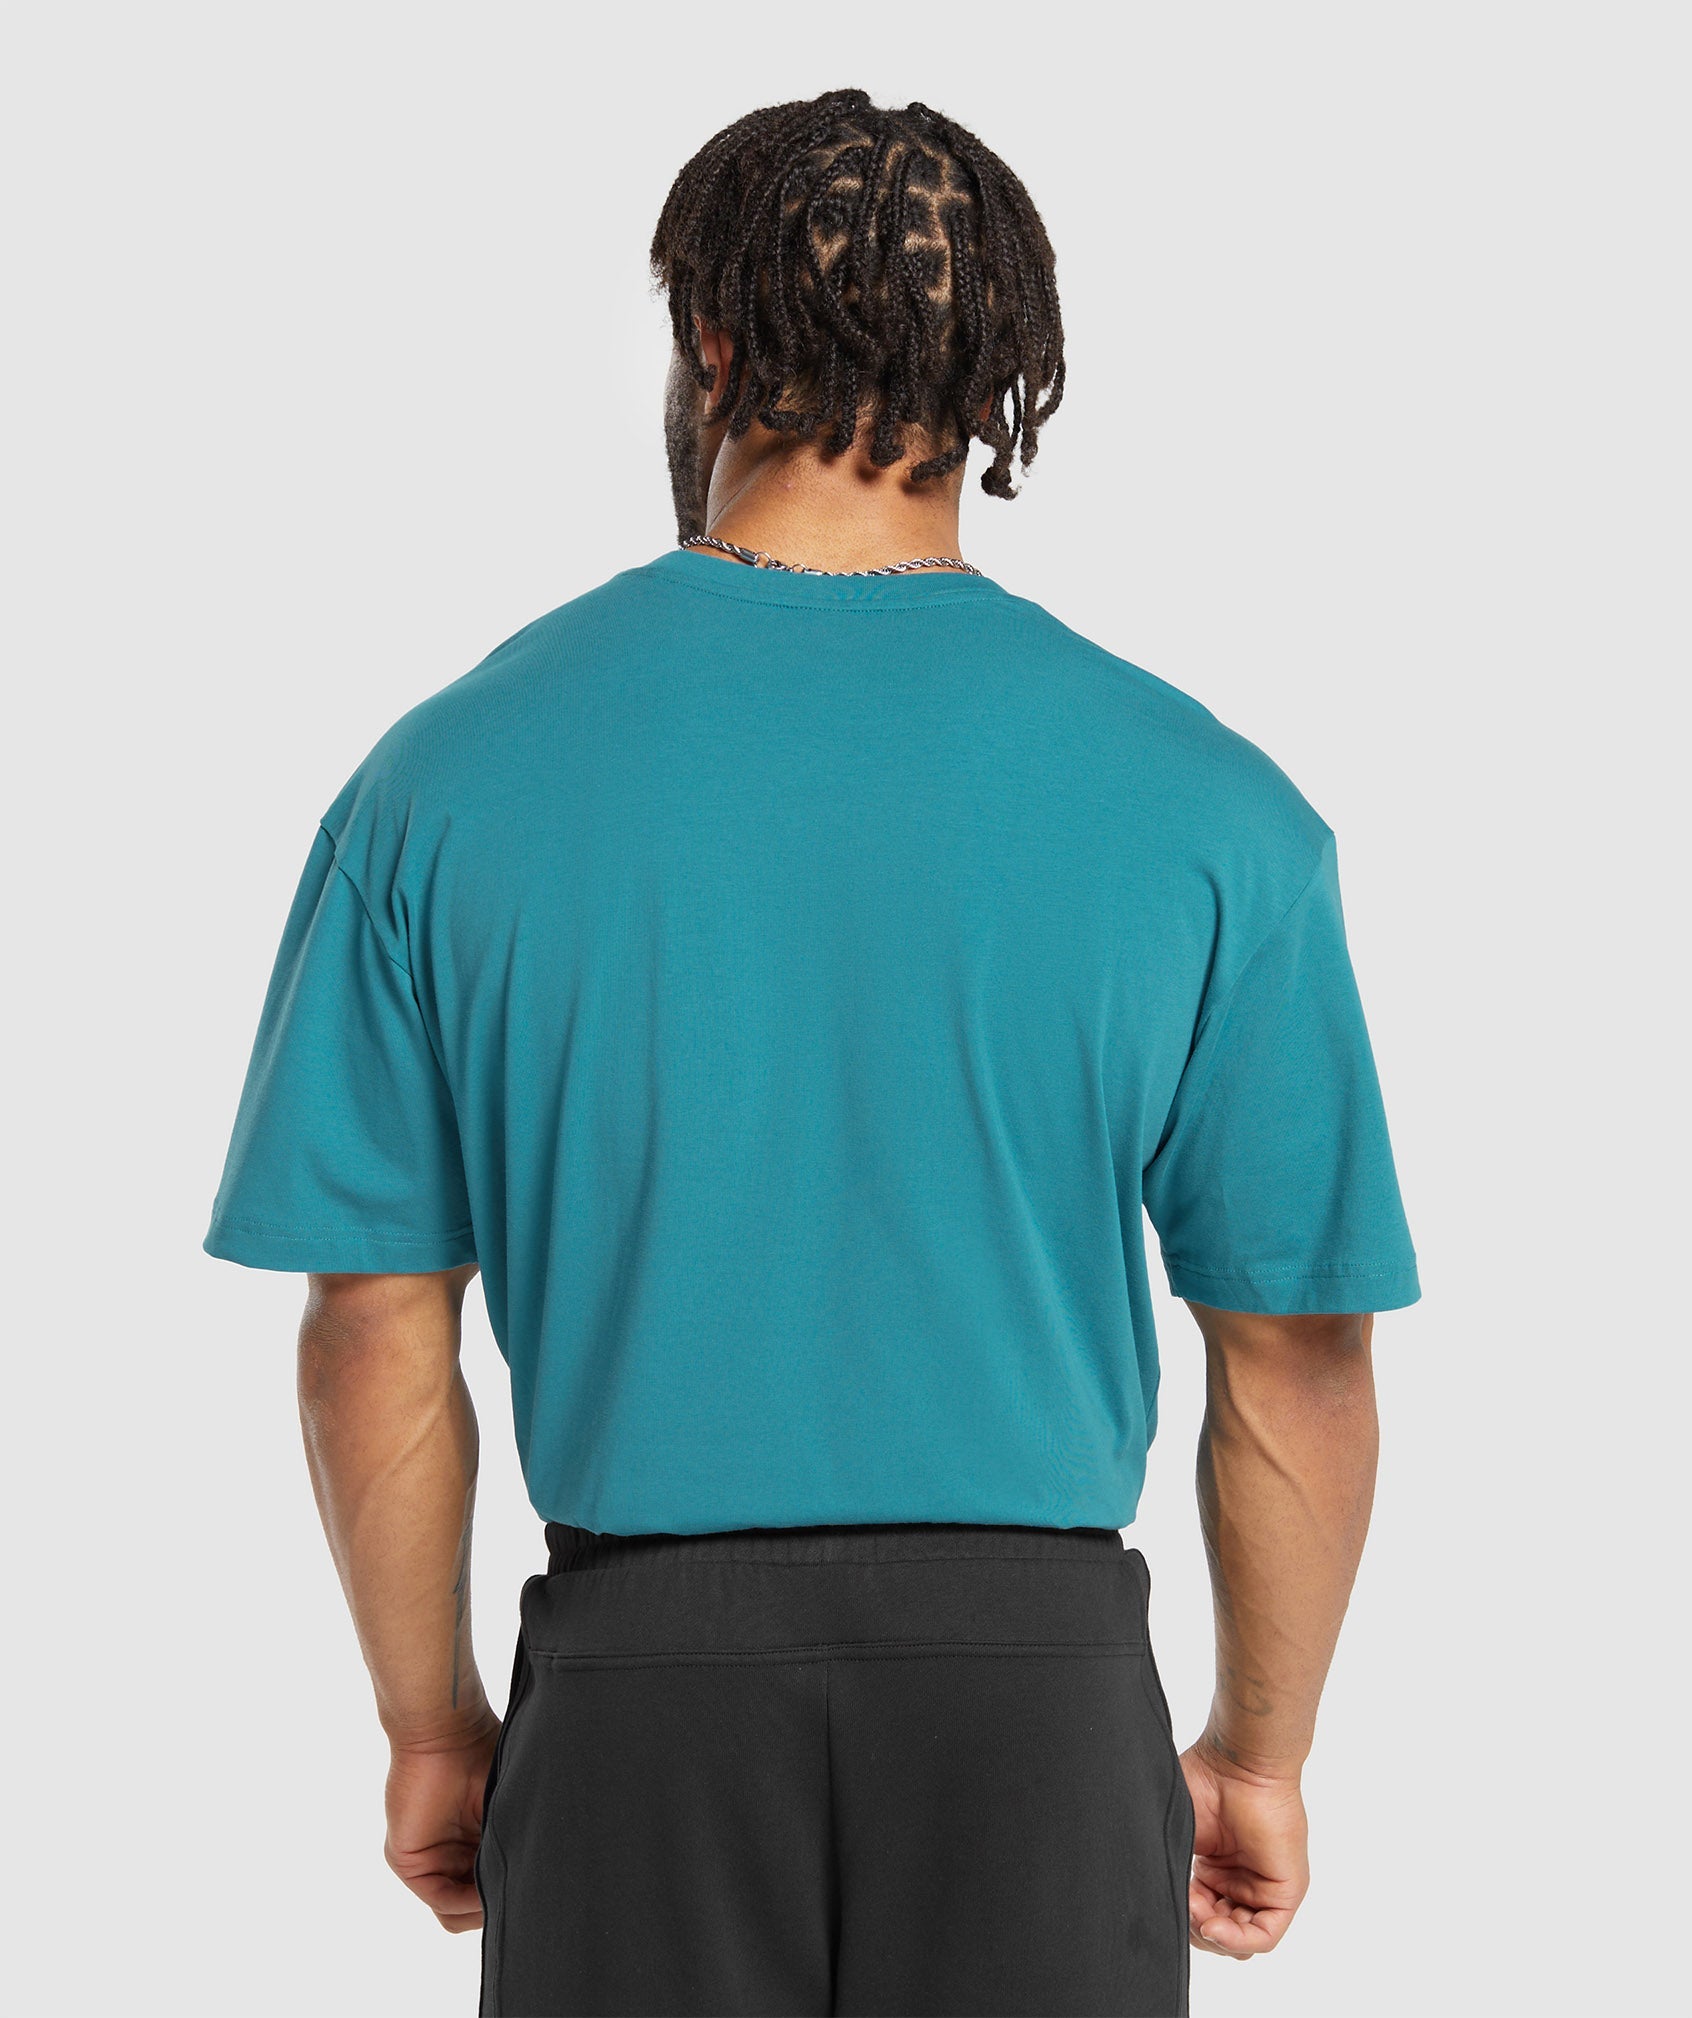 Gymshark Apollo T-Shirt - Green 